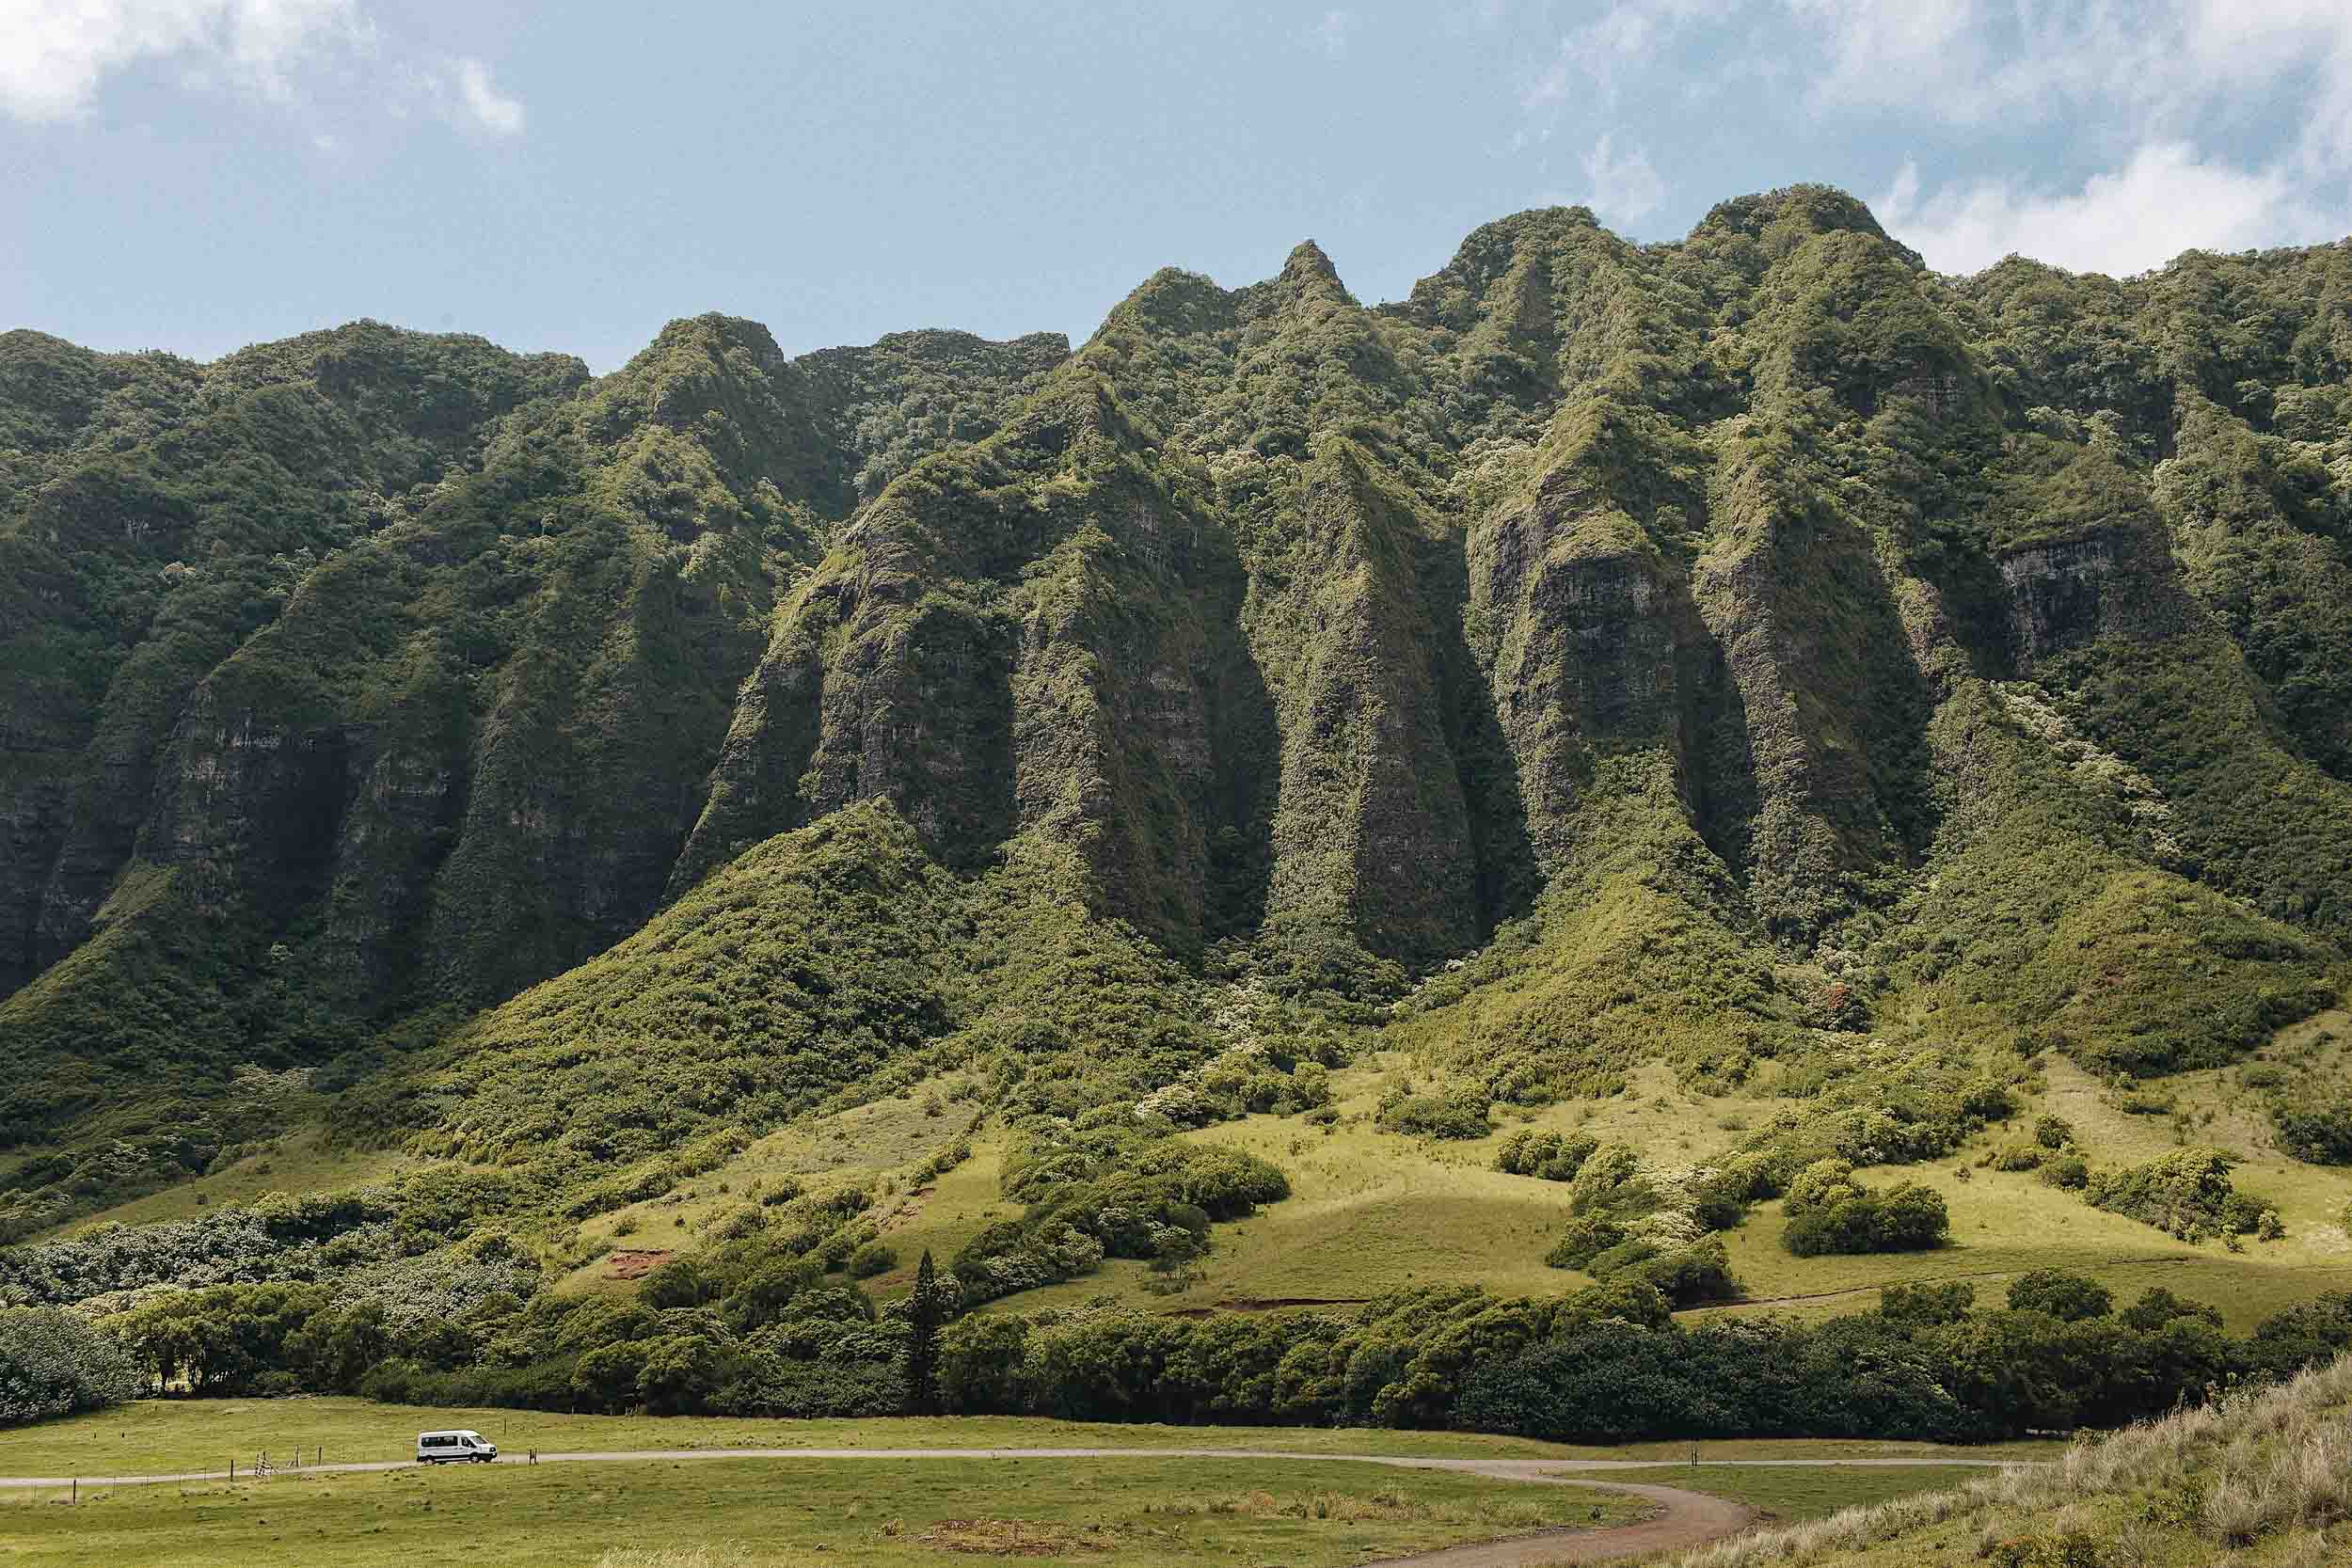 Jurassic Park Hawaii is located in the Kaʻaʻawa Valley at Kualoa Ranch Oahu